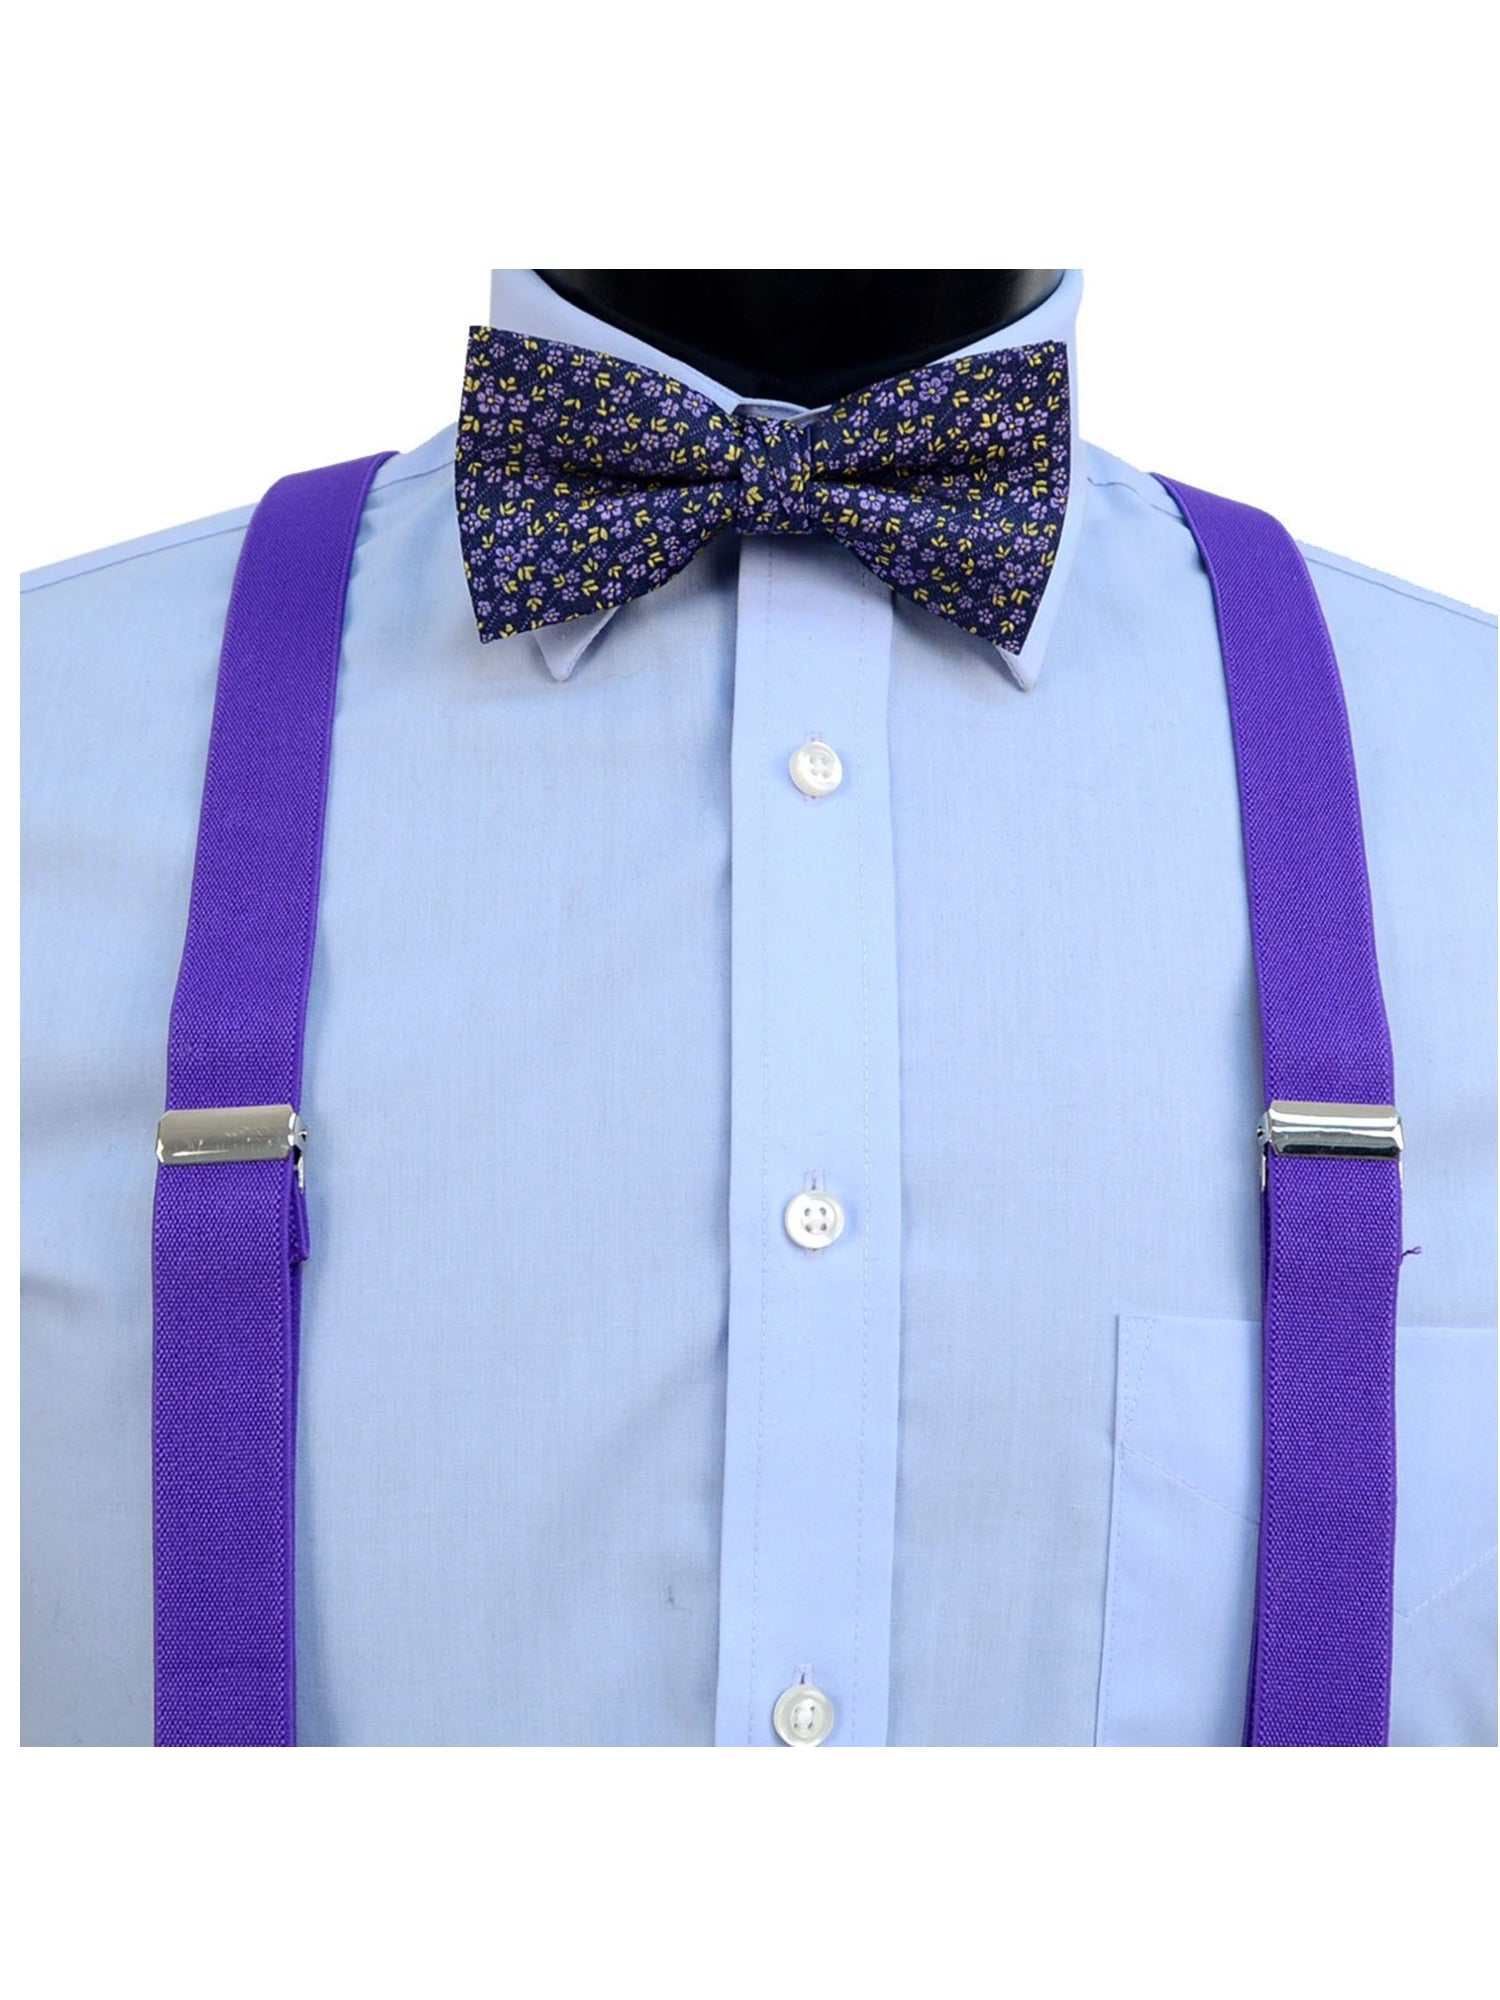 Men's Purple 3 PC Clip-on Suspenders, Bow Tie & Hanky Sets Men's Solid Color Bow Tie TheDapperTie   